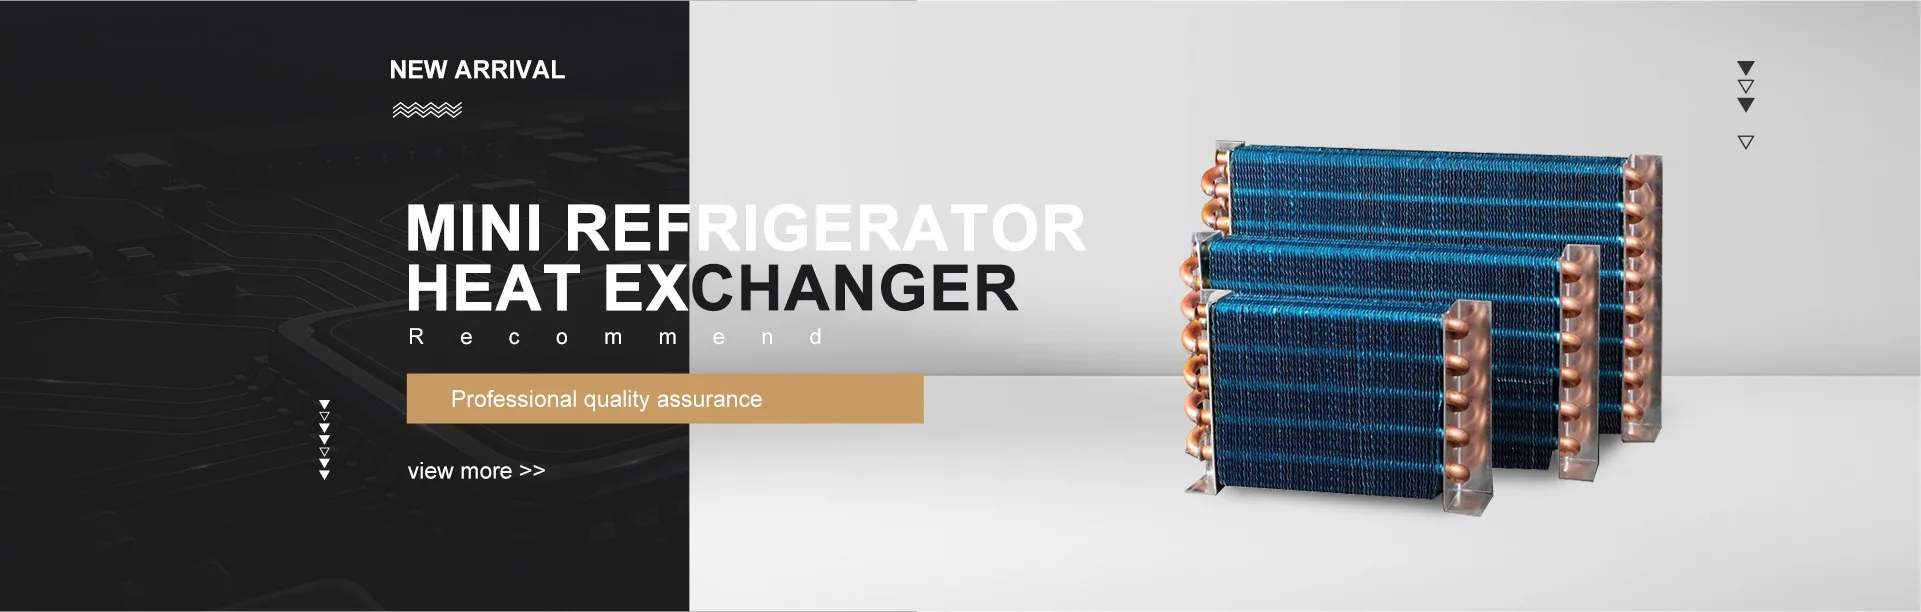 Mini refrigerator heat exchanger